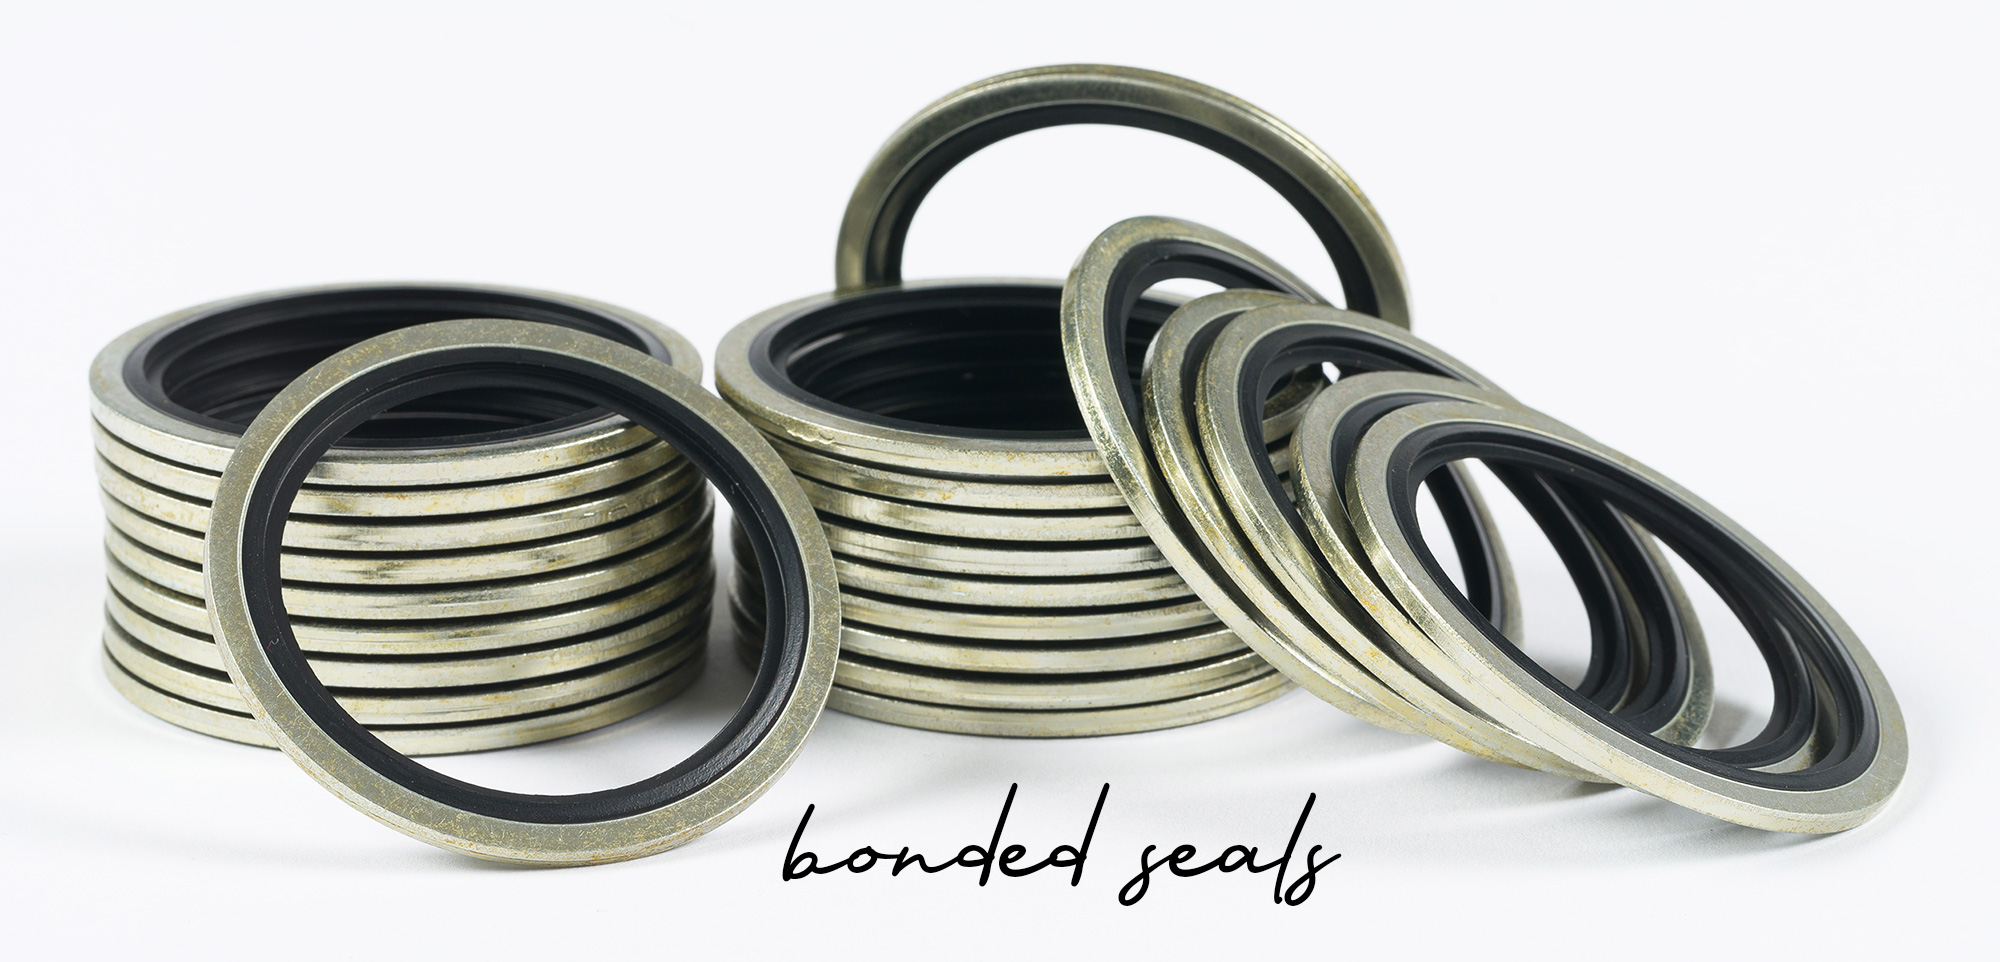 Bonded Seals